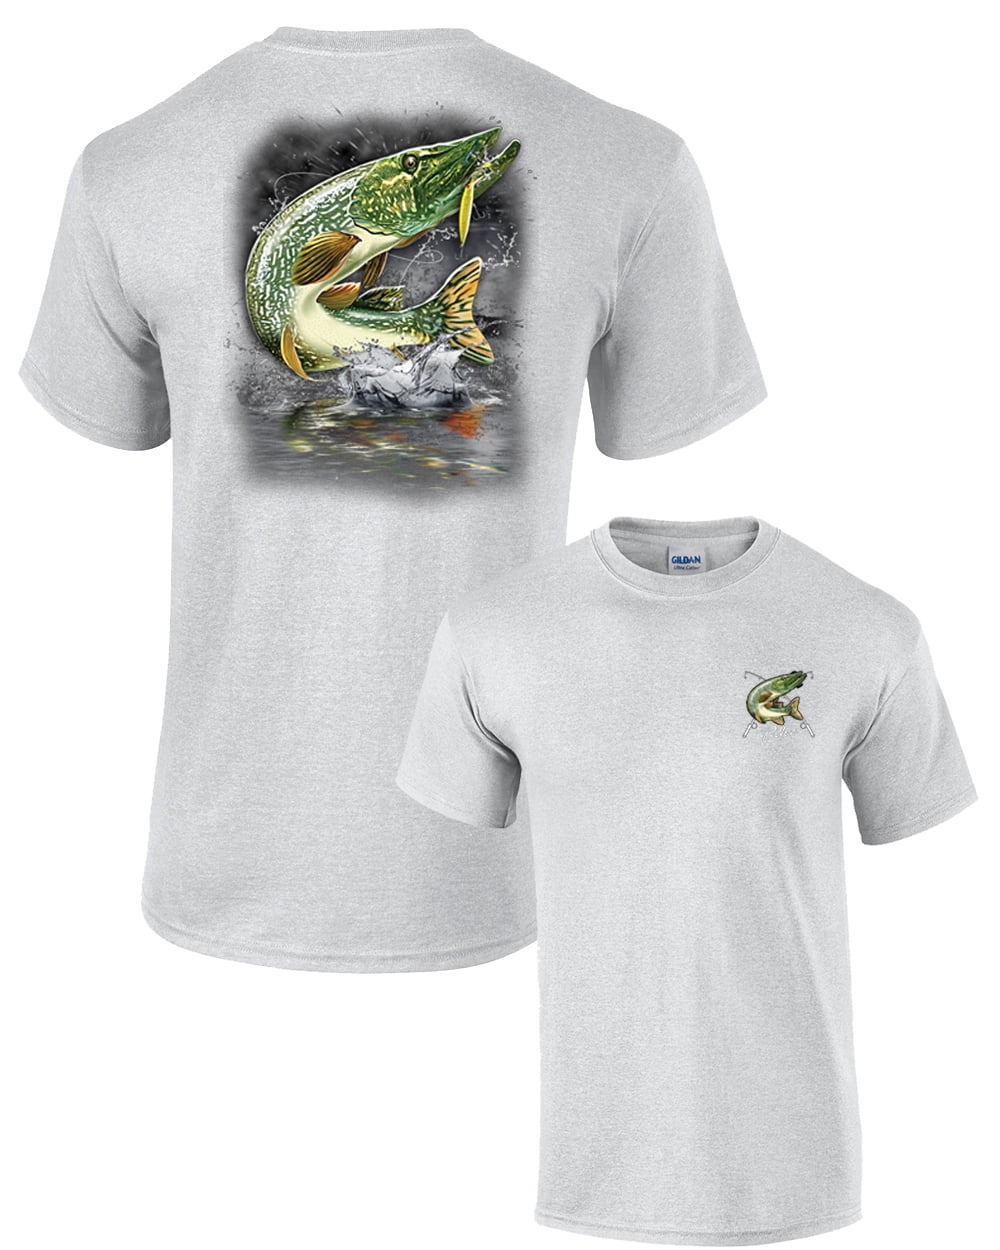 Pike Hunter T-shirt, Fishing, Men, Women, Short Sleeve, Spring, Summer,  Boating, Tees, Fishing Shirts 